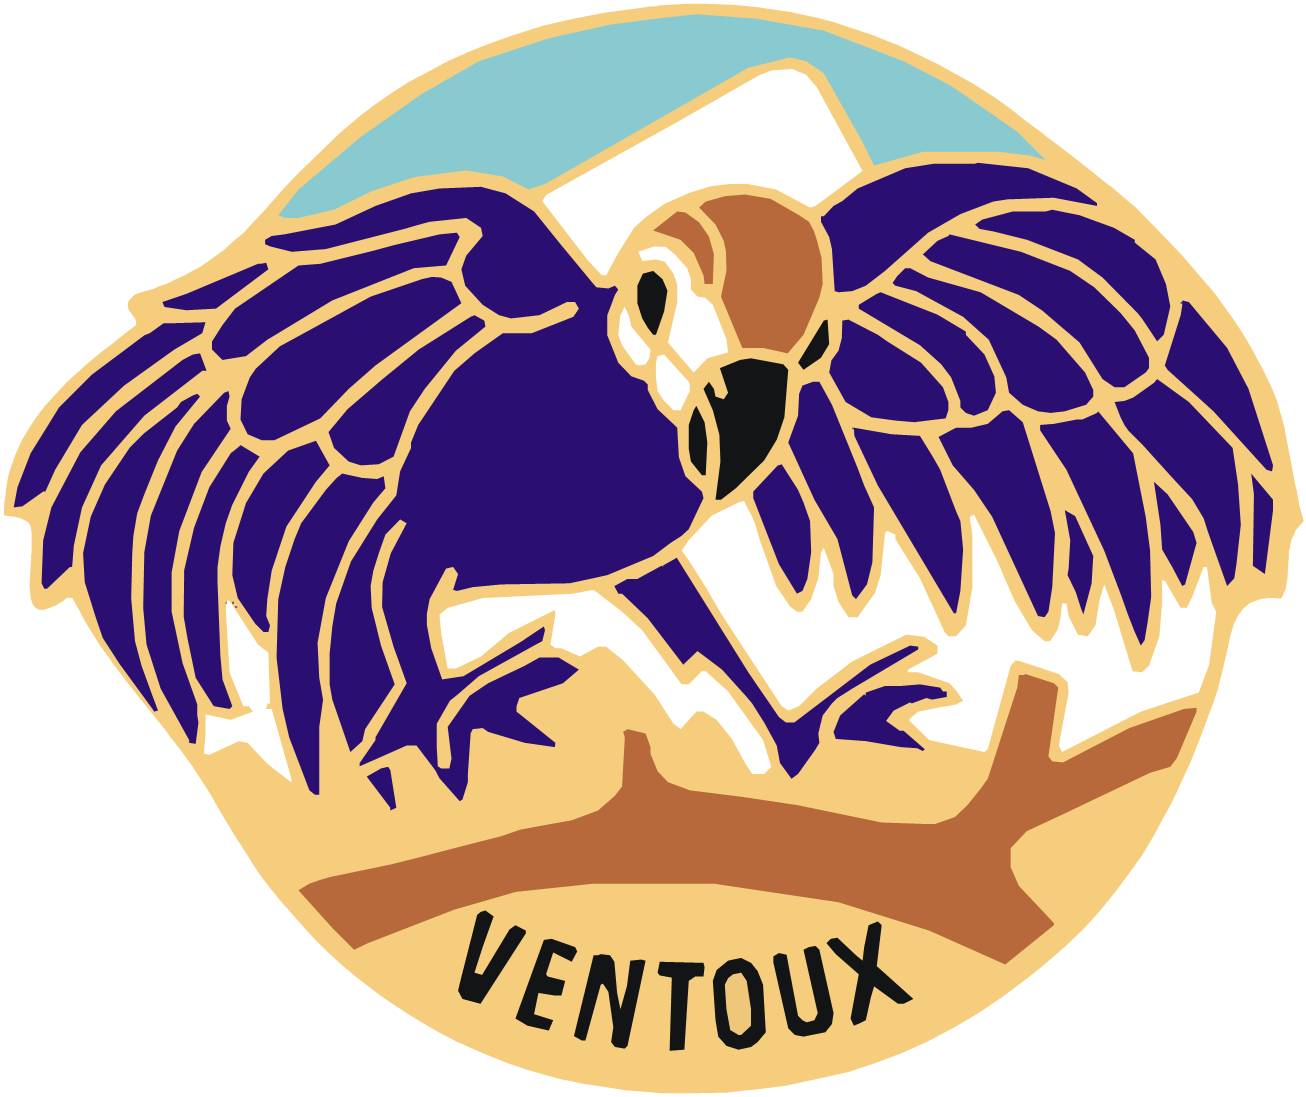 The Ventoux sign